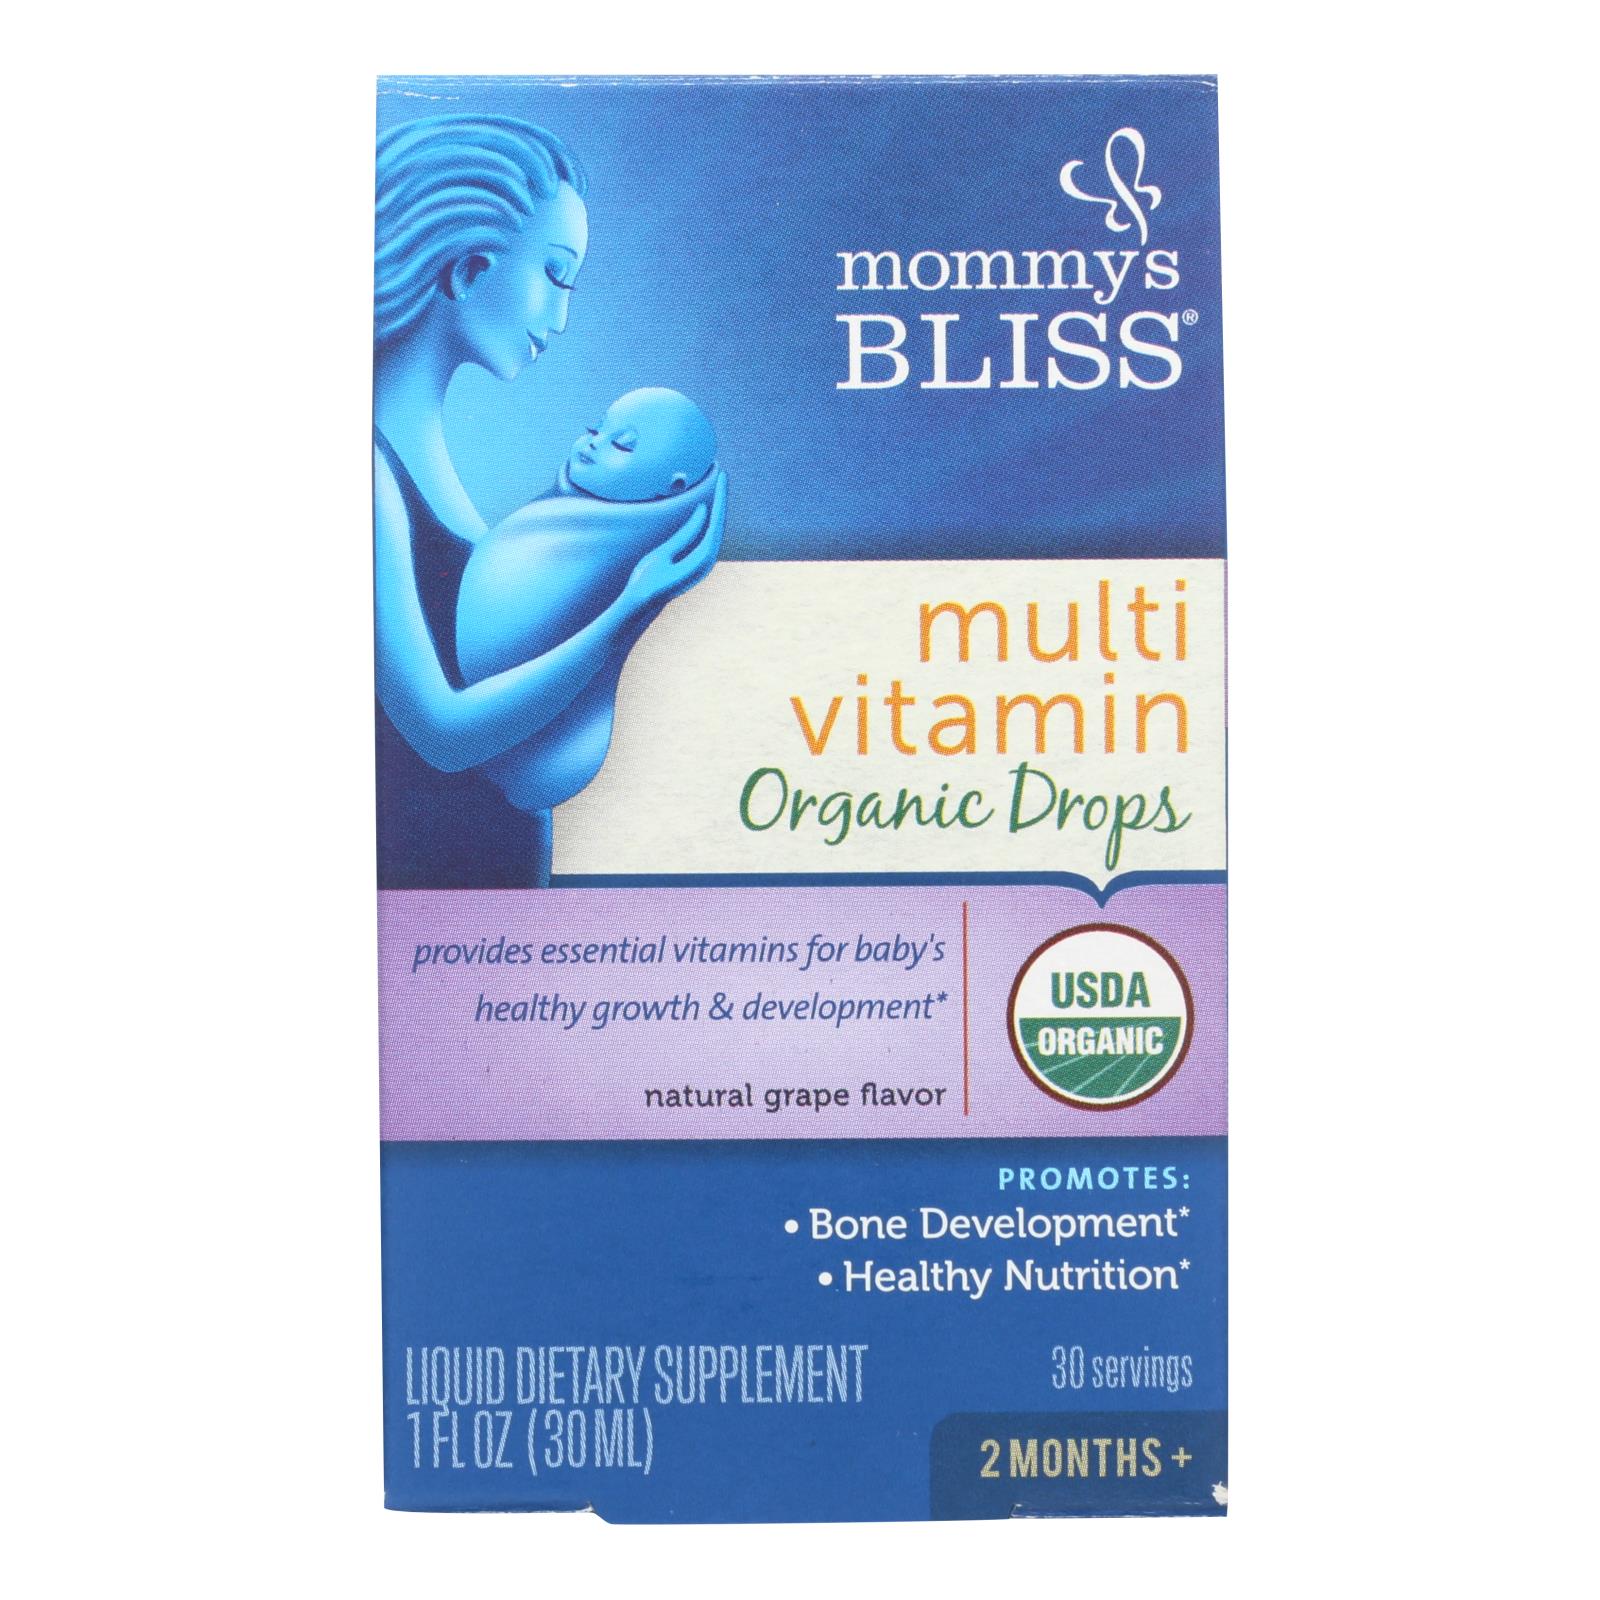 Mommy's Bliss Multi Vitamin Drops Liquid Dietary Supplement - 1 Each - 1 FZ